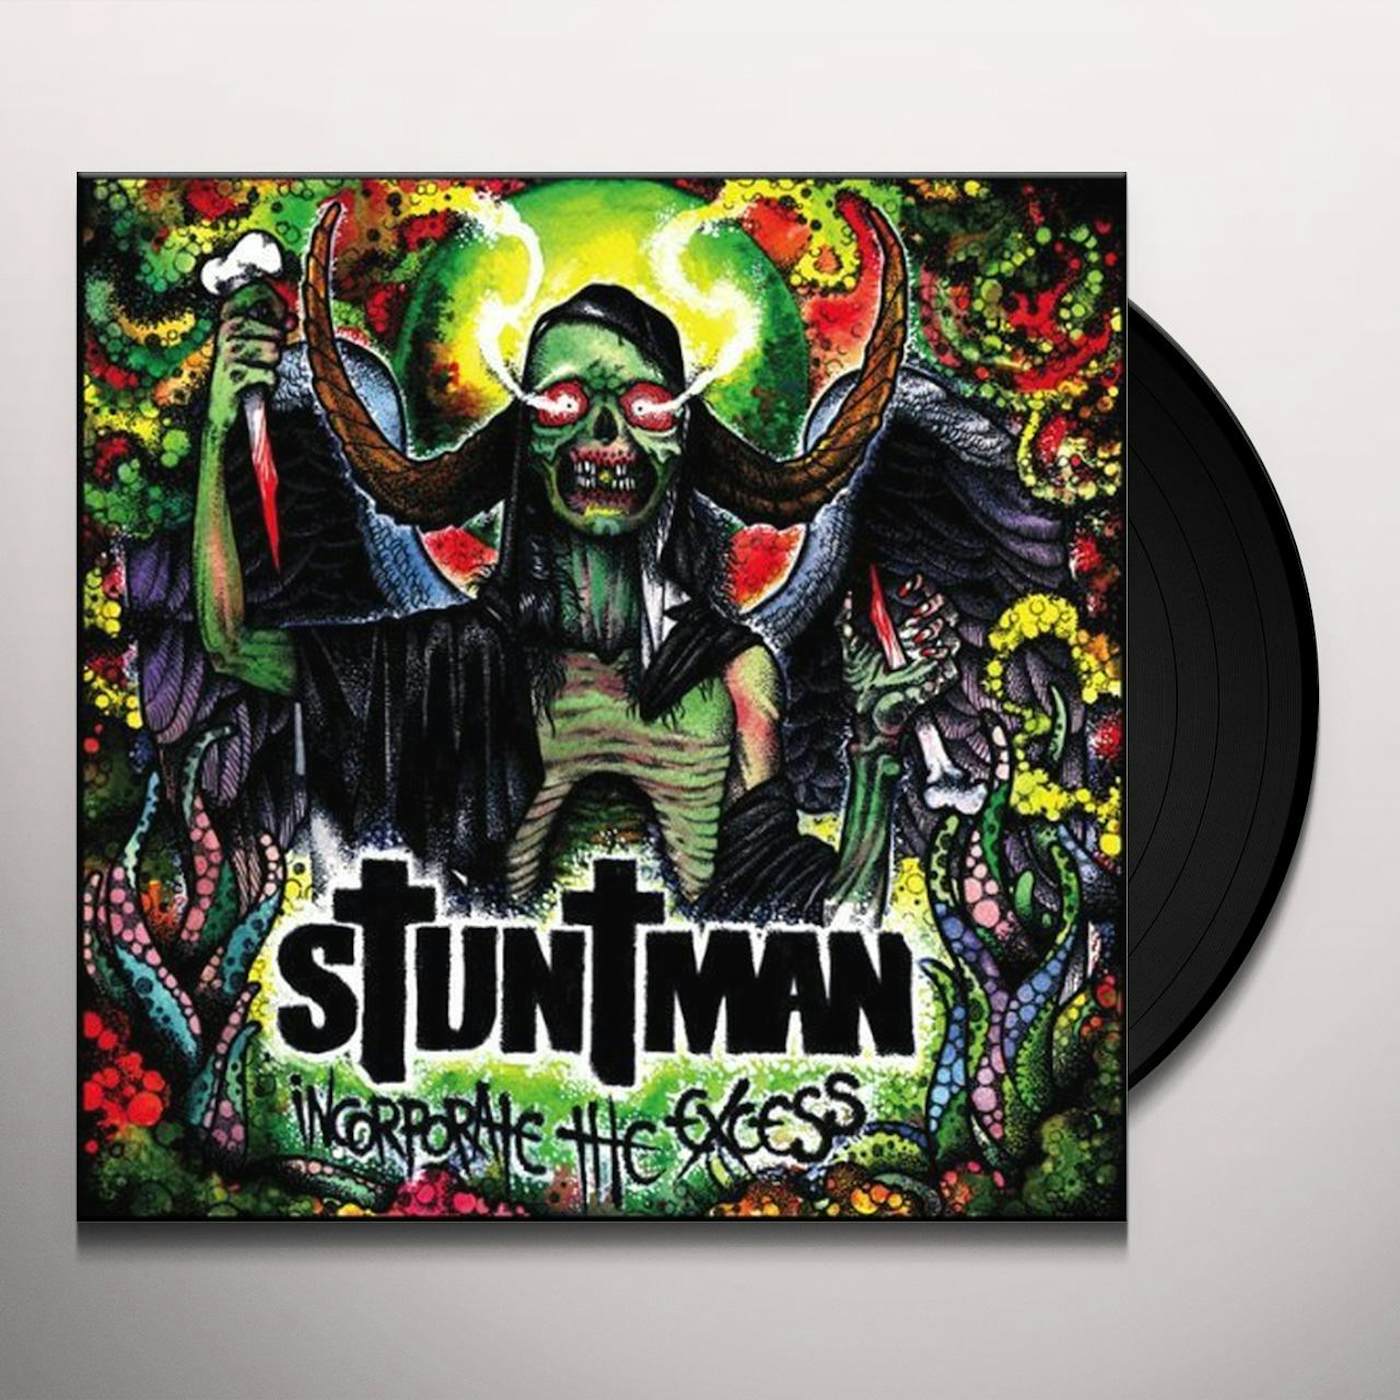 Stuntman Incorporate the Excess Vinyl Record